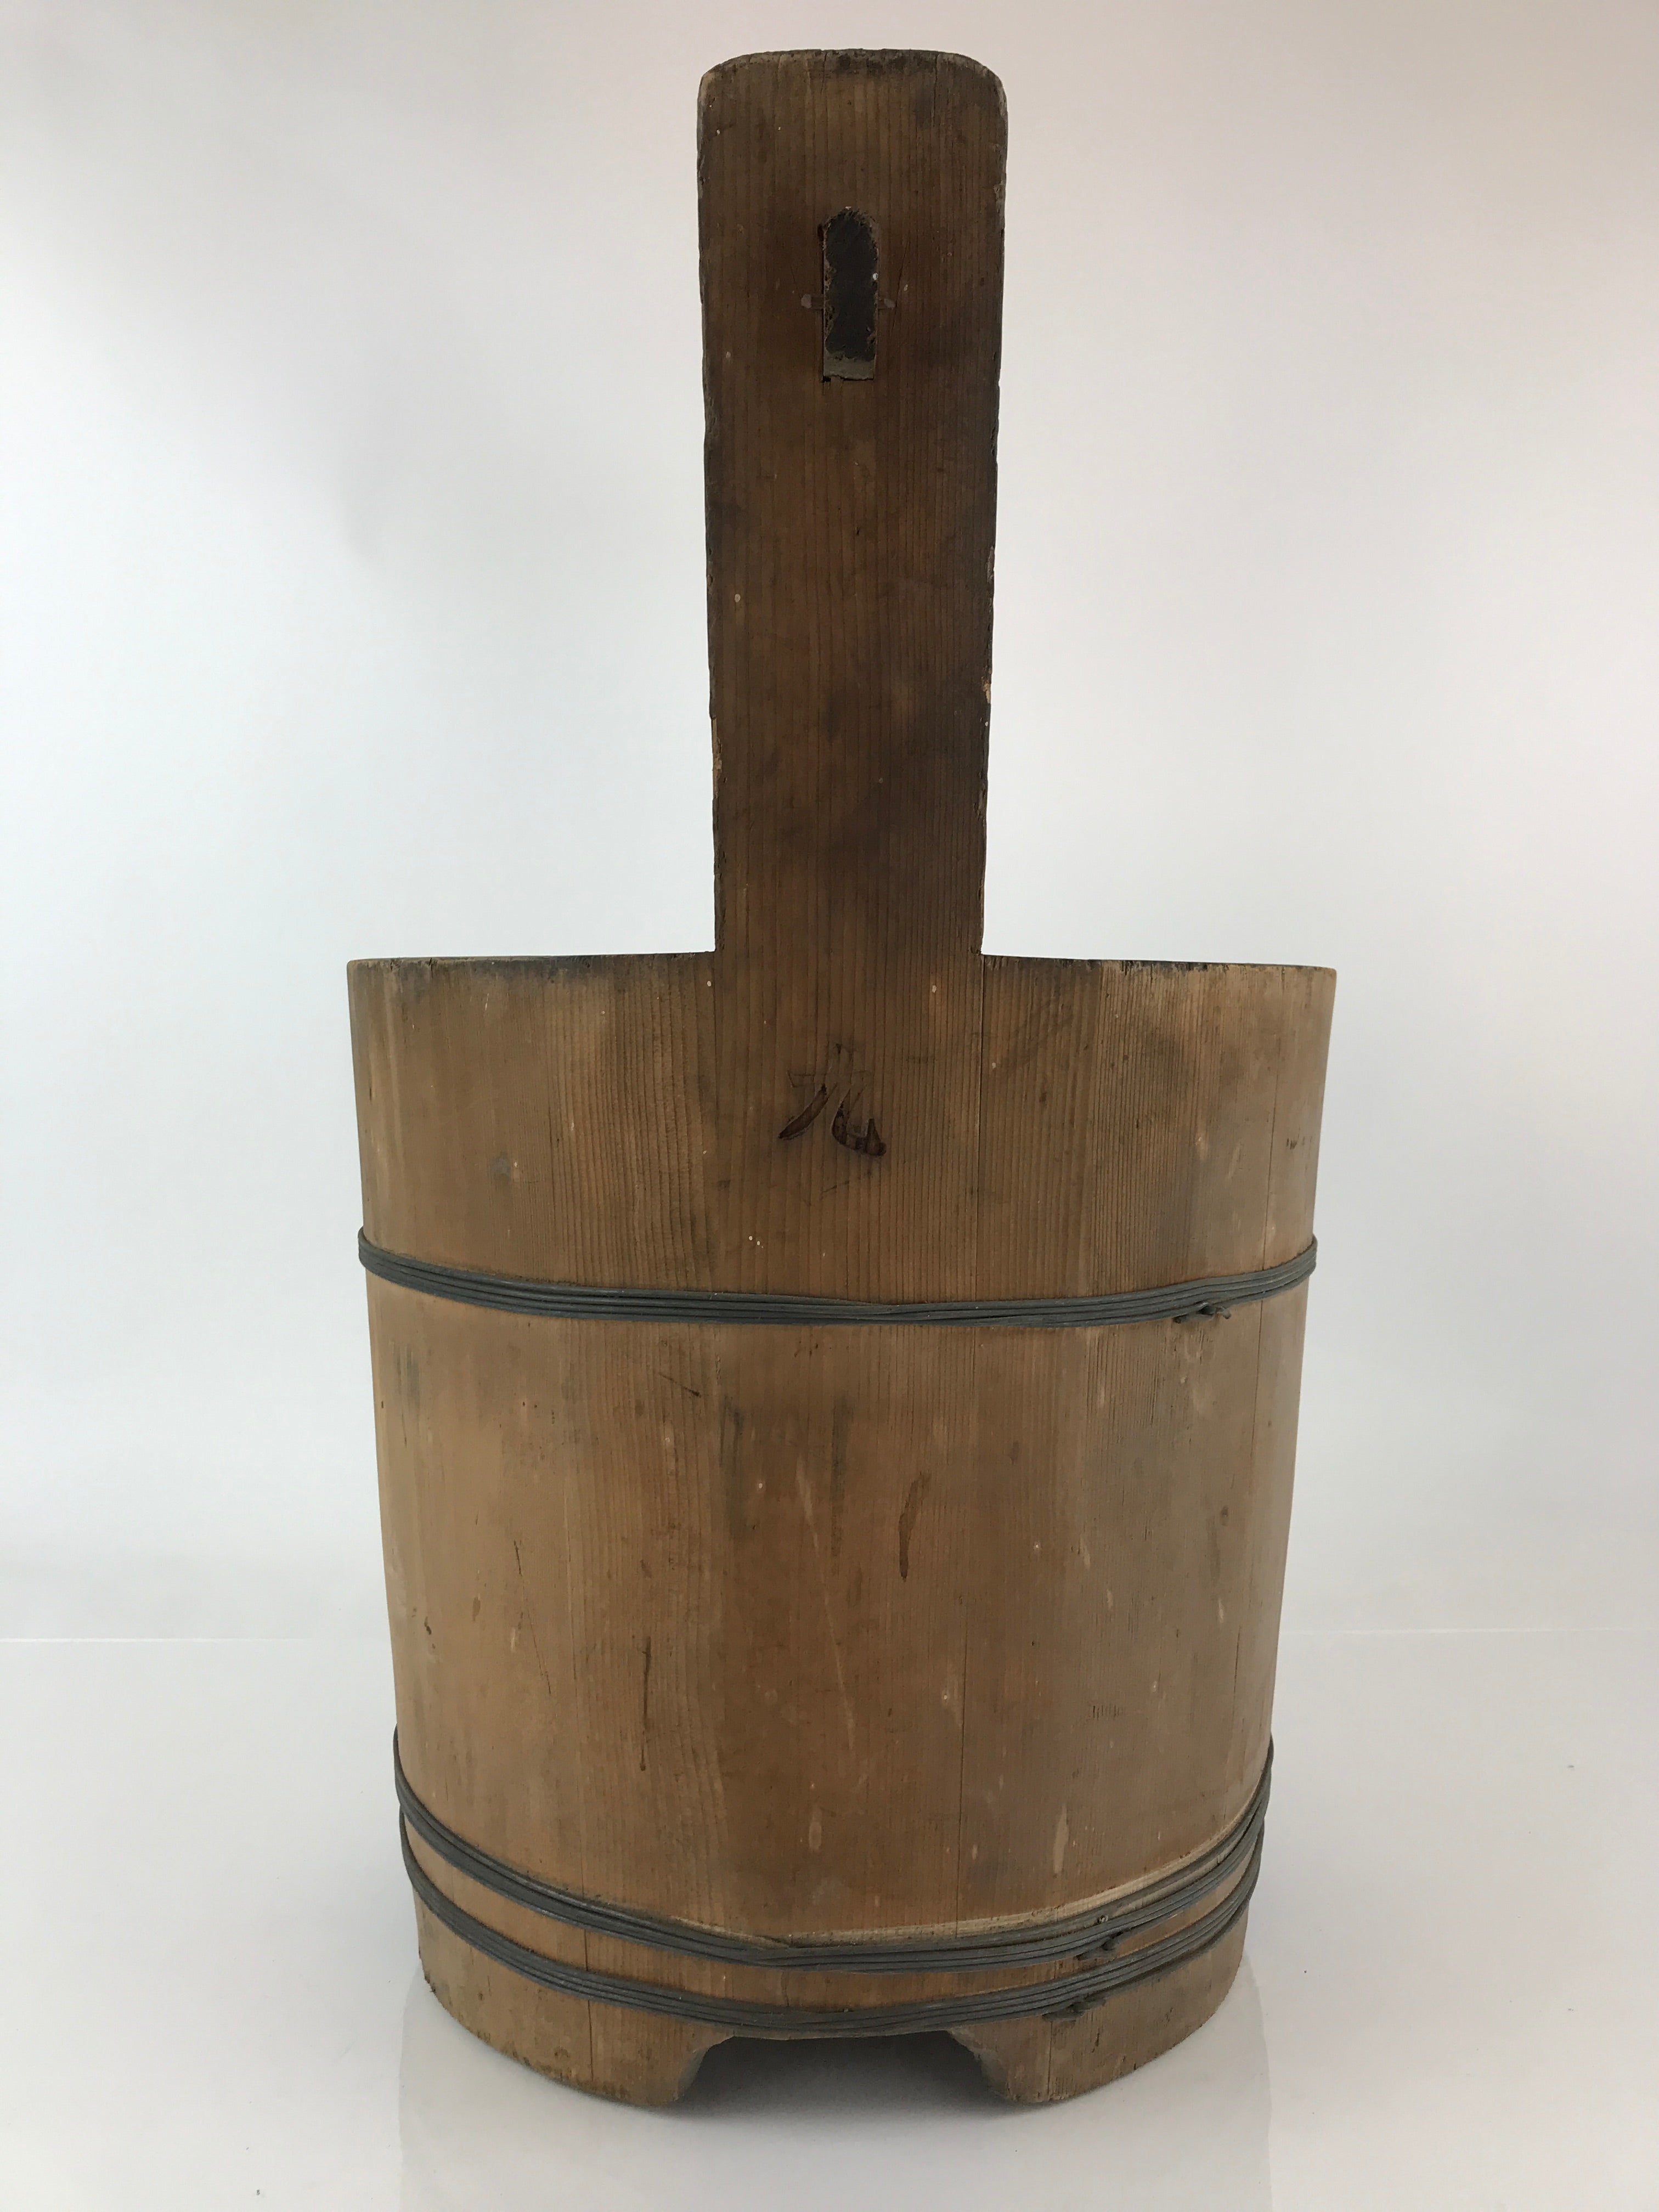 Antique Japanese Wooden Mizuoke Bucket C1900 Handle Teoke Well Water BK3